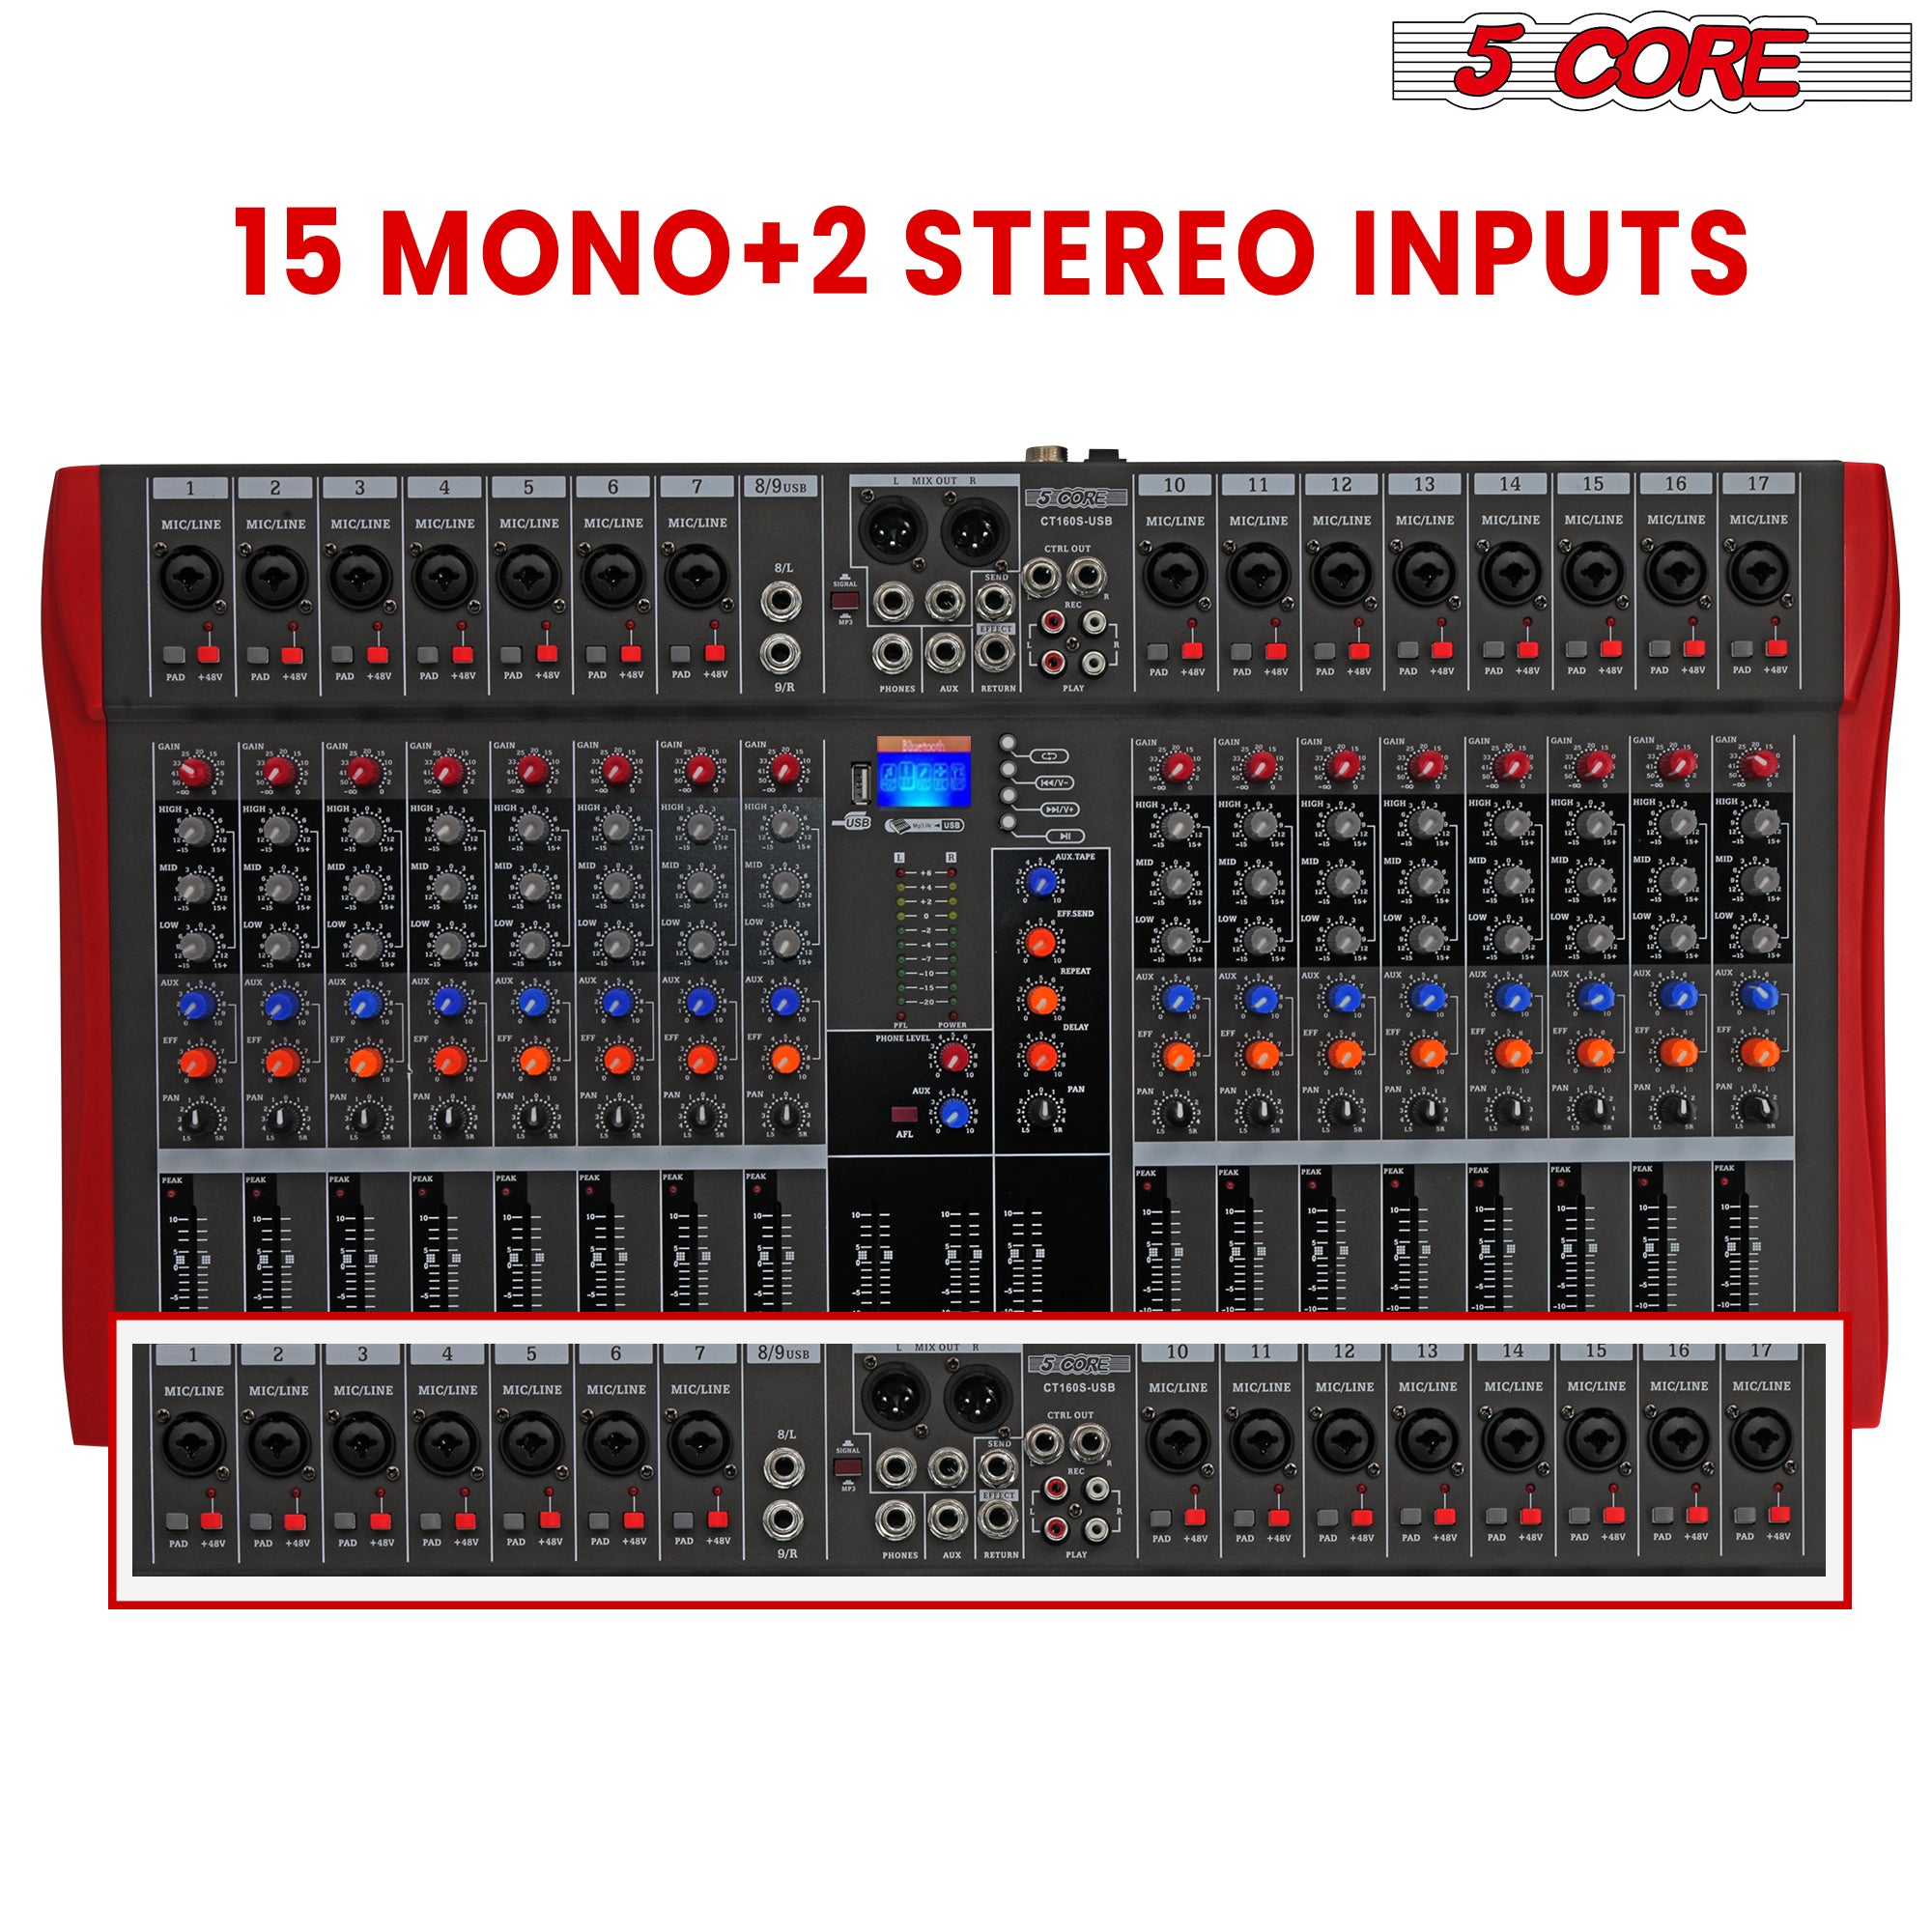 This Audio Mixer has 15 MONO + 2 Stereo Inputs.